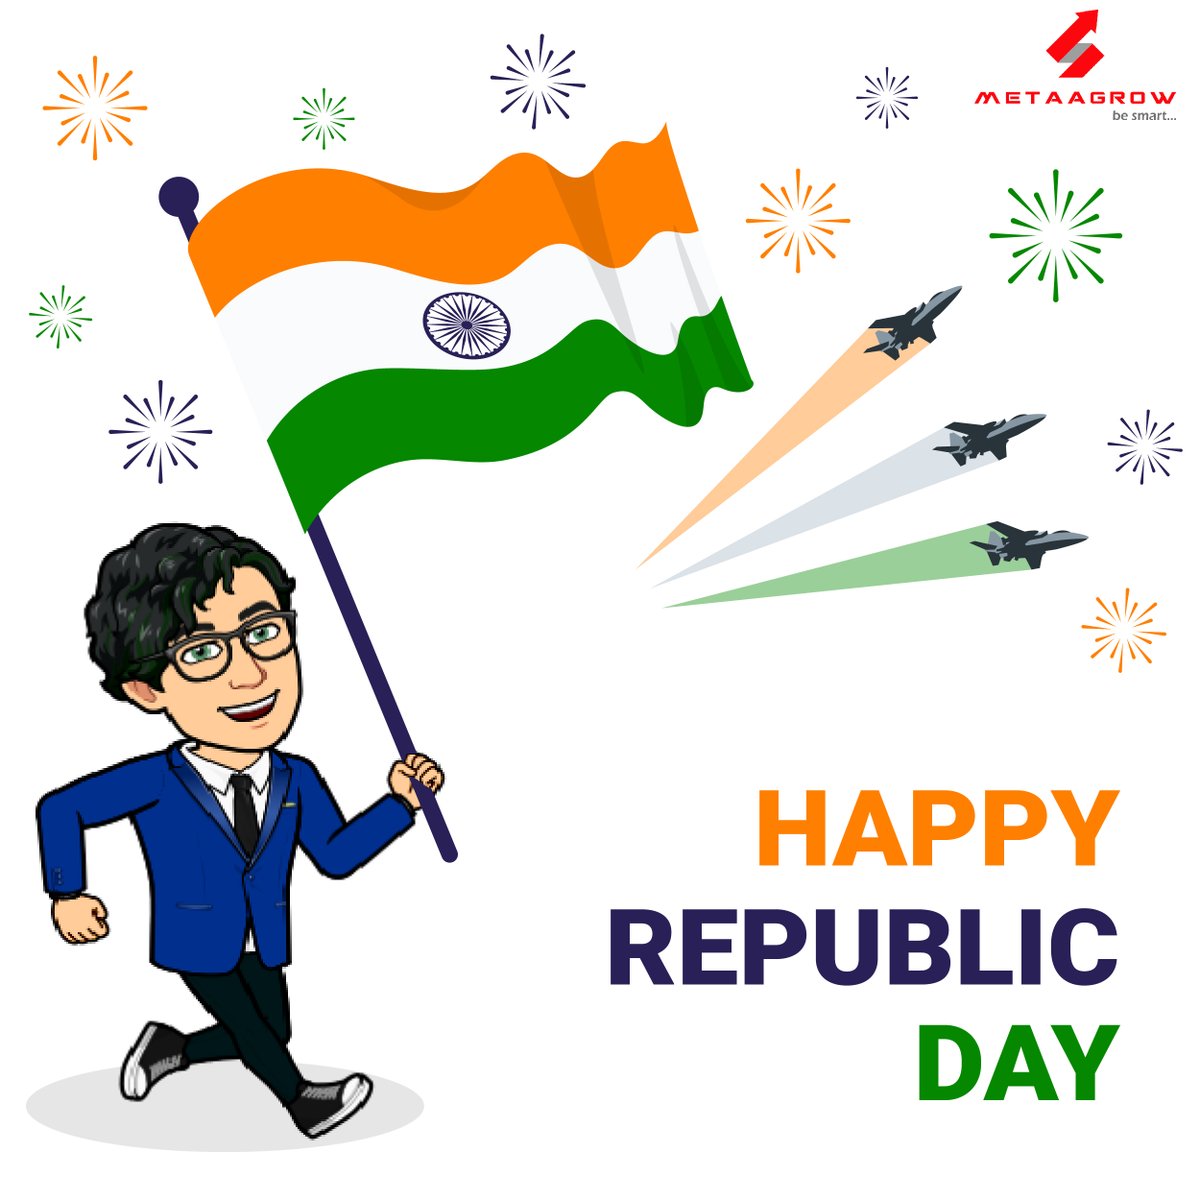 Happy 74th Republic Day, India!
.
.
.
#HappyRepulicDay #Metaagrow #cloud9basedsoftware #MaintenanceSoftware #DigitalChecklist #CloudBasedSoftware #OperationsManagementSoftware #republicday2023 #republicdayindia #ConstitutionDay #74thRepublicDayOfIndia #JaiHind